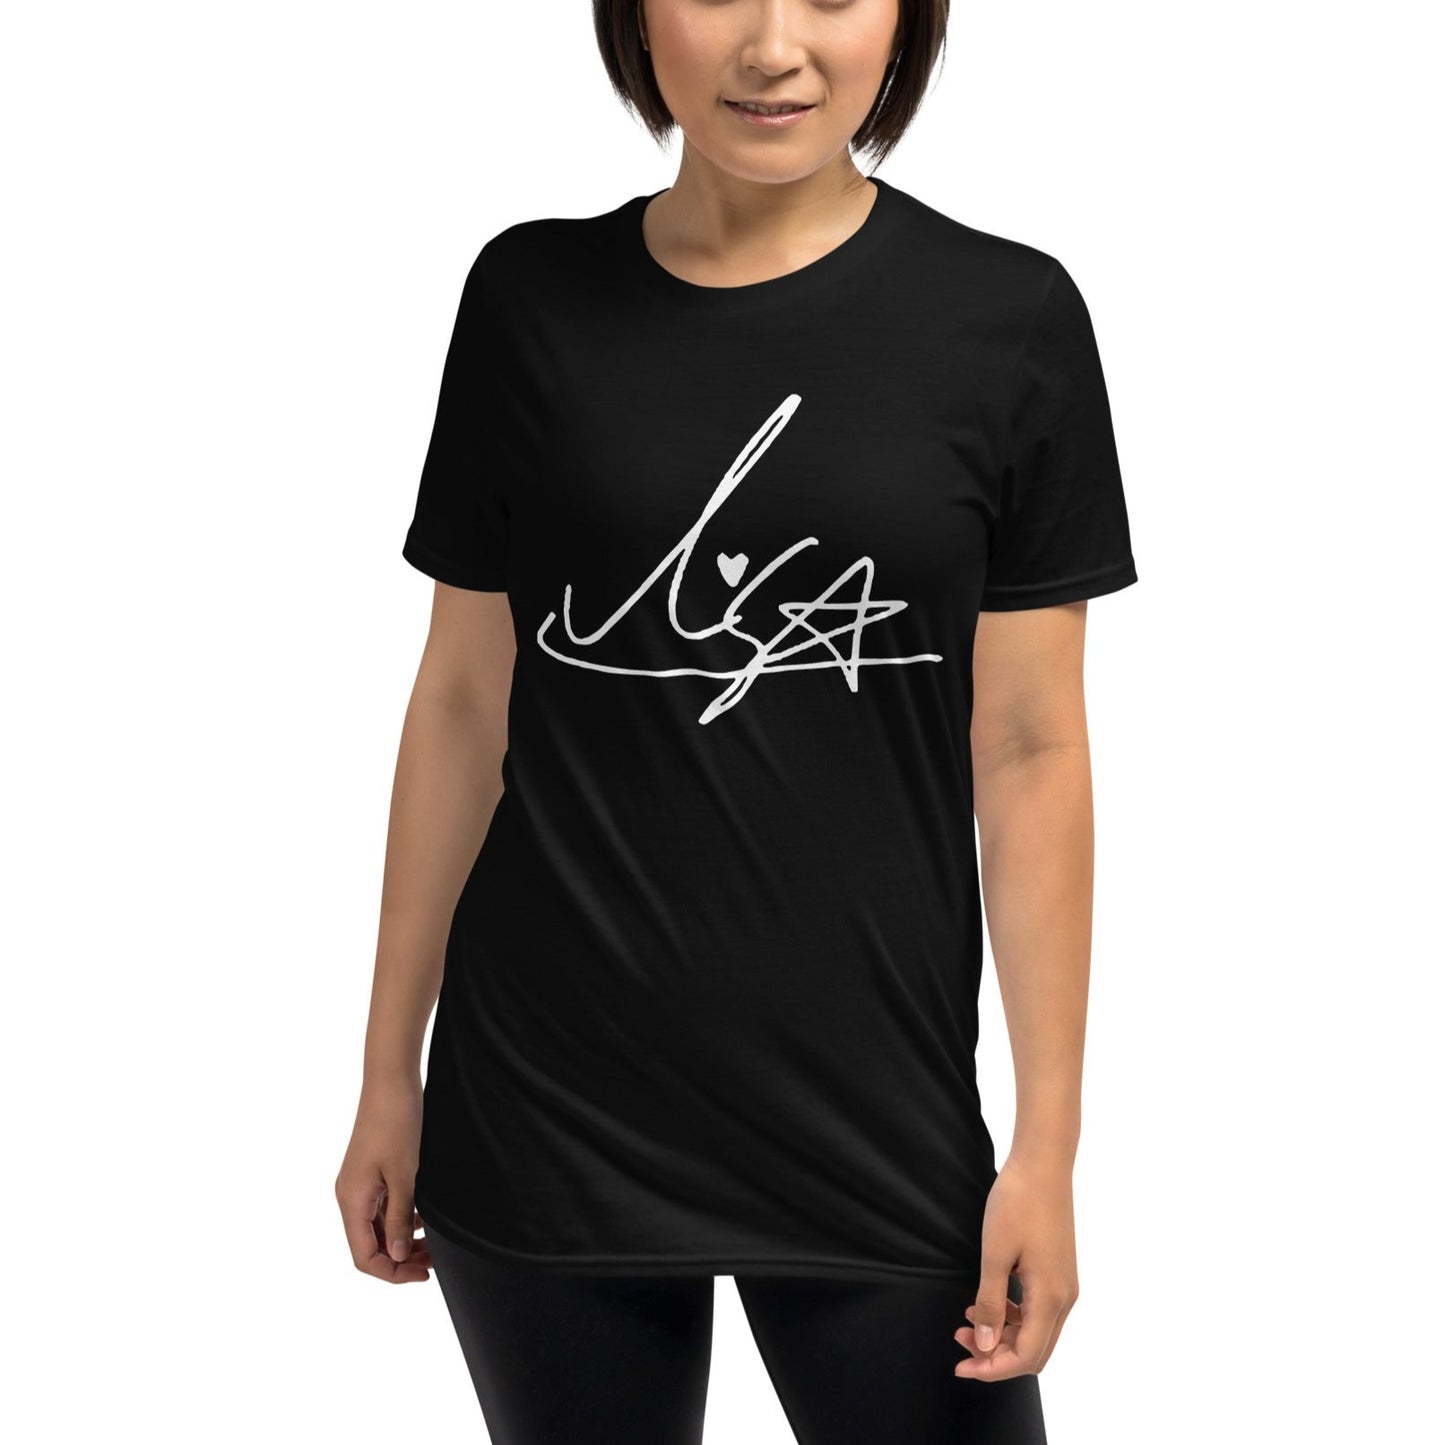 BLACKPINK Lisa, Lalisa Manobal Autograph Unisex T-Shirt